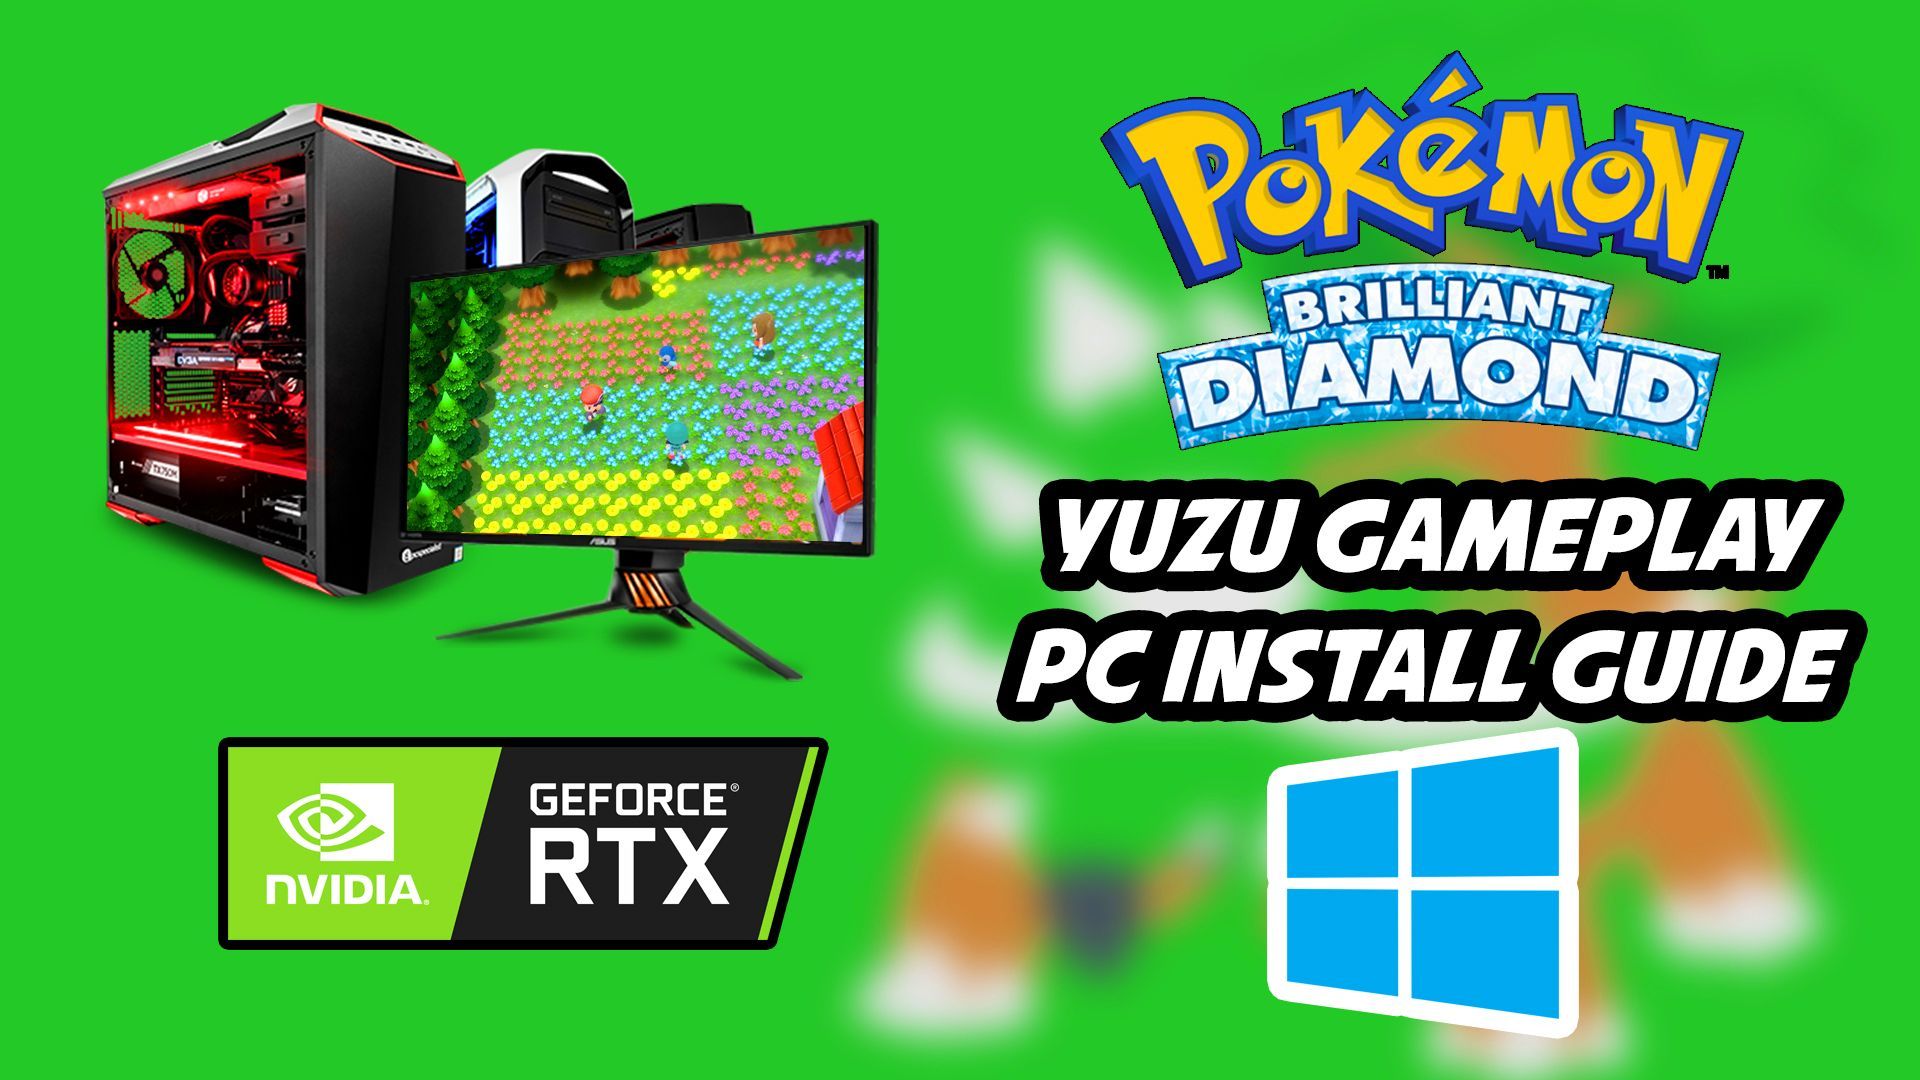 How to play Pokémon Brilliant Diamond on PC (Yuzu Emulator) - BiliBili